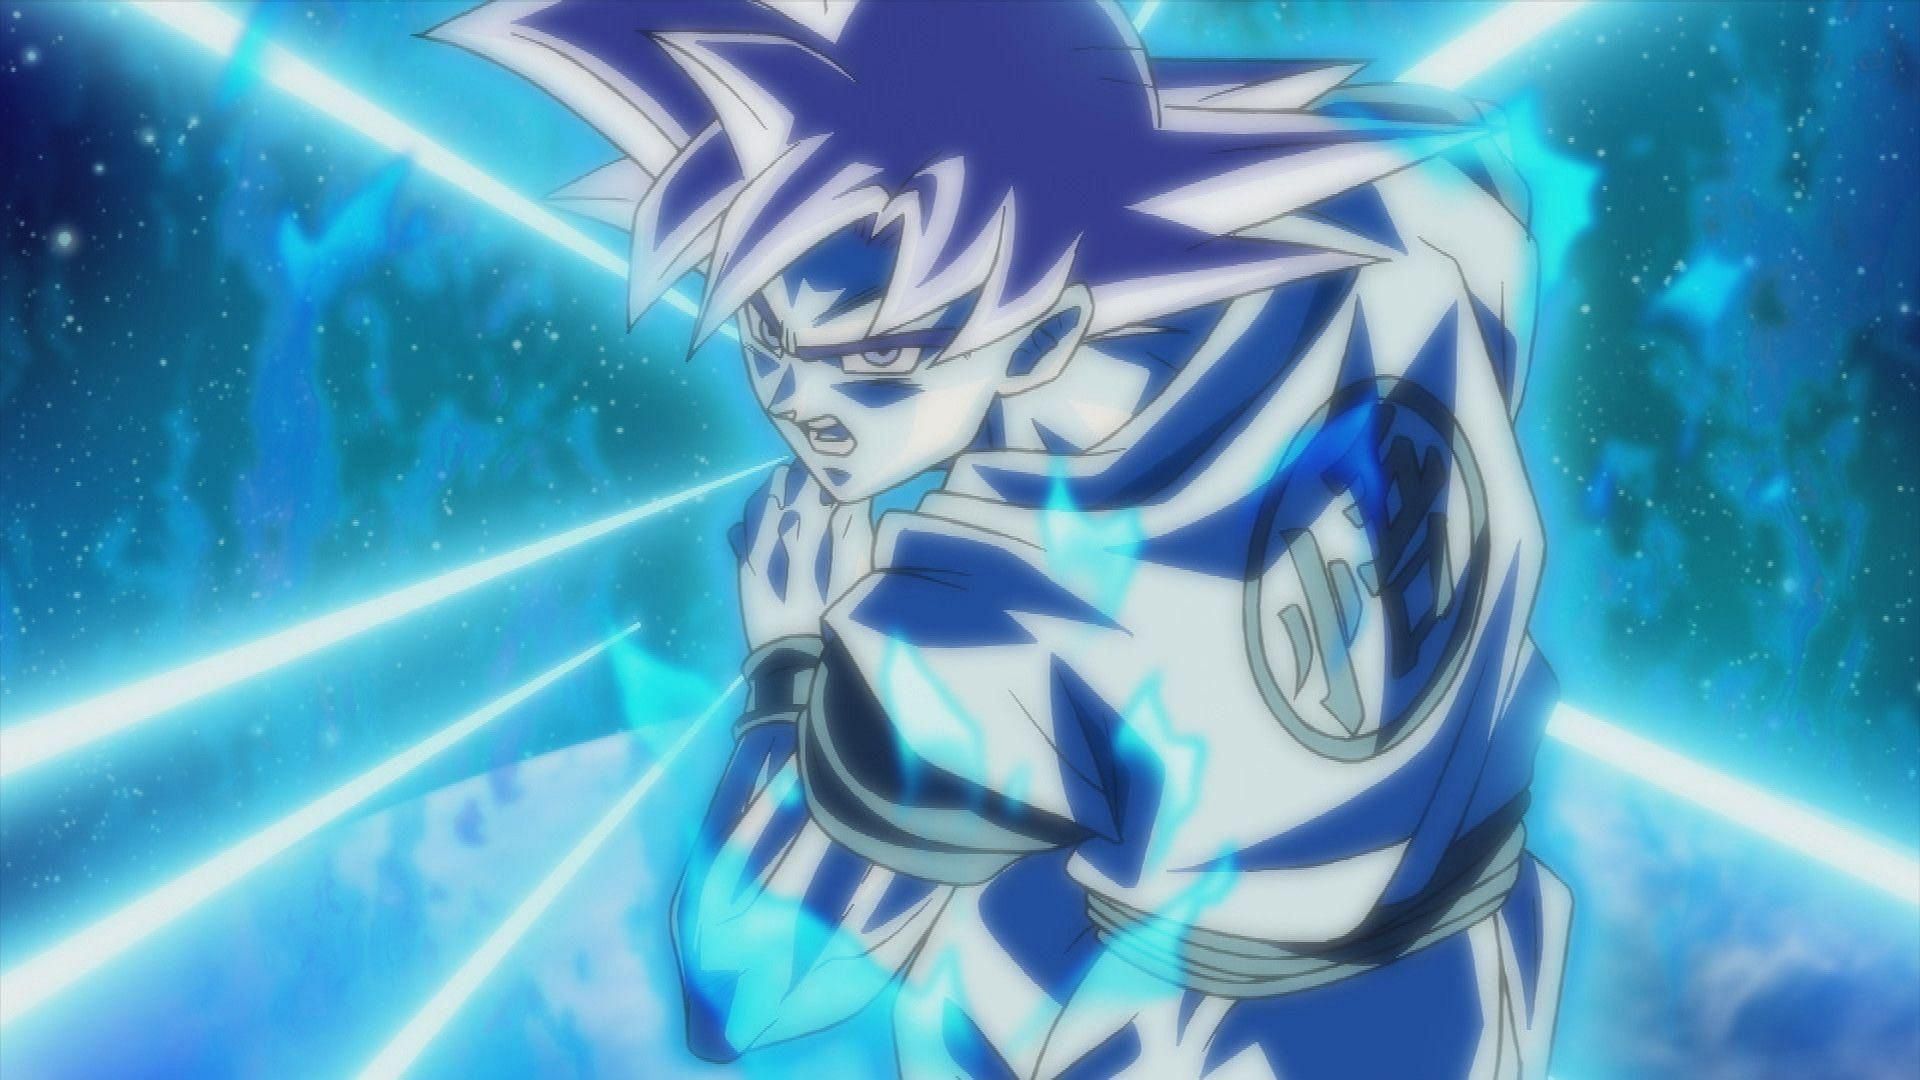 Goku charging a kamehameha (Image via Toei Animation)